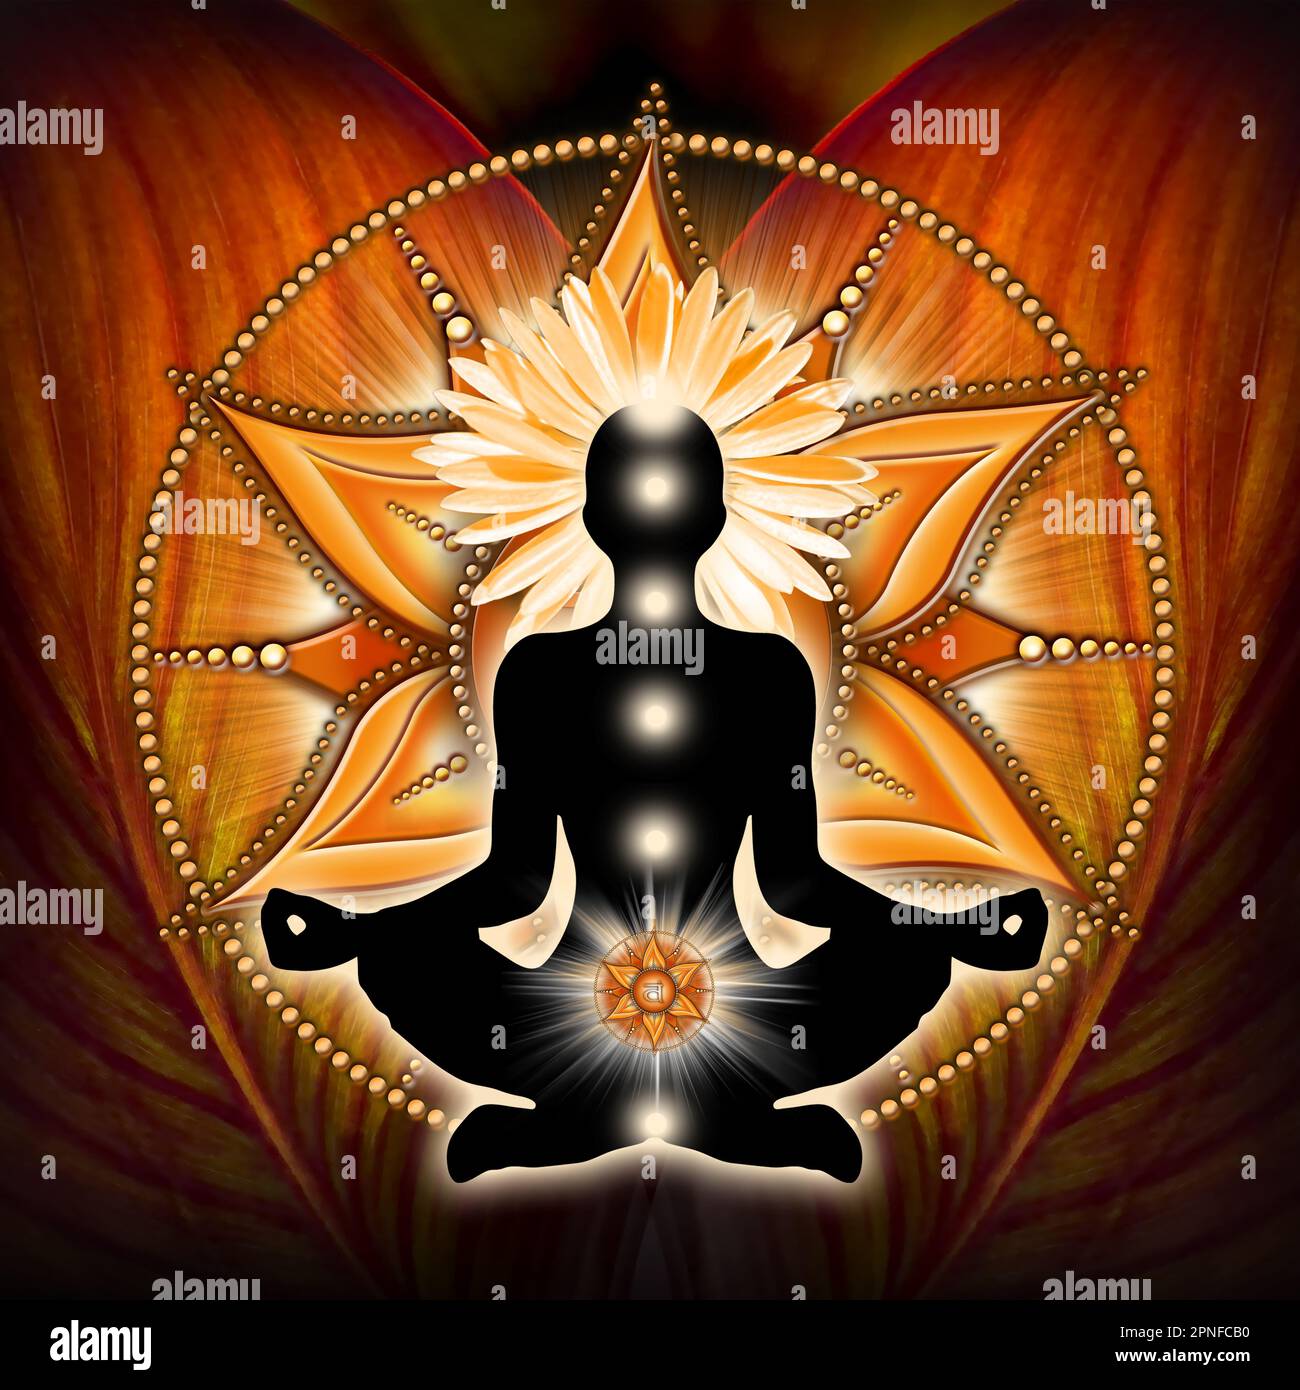 Sacral chakra meditation in yoga lotus pose, in front of svadhisthana chakra symbol and canna leaf. Stock Photo